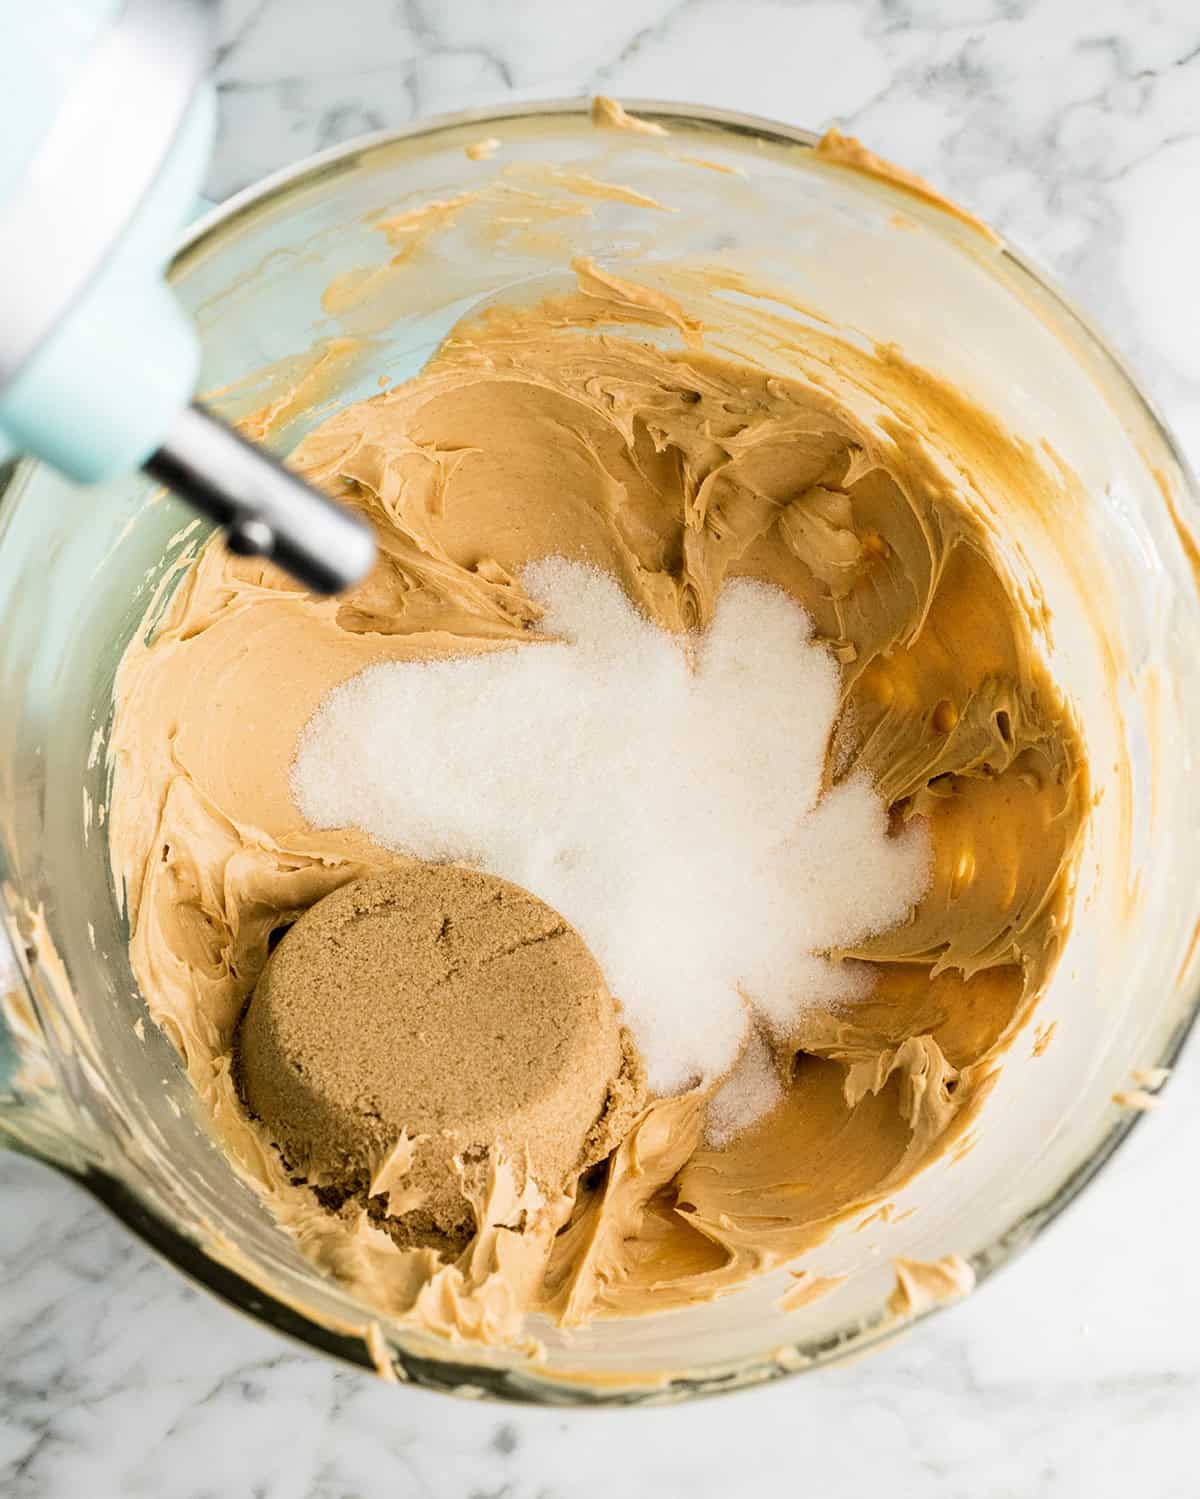 making Peanut Butter Blossoms recipe in a standing mixer - adding sugars to butter/peanut butter mixture